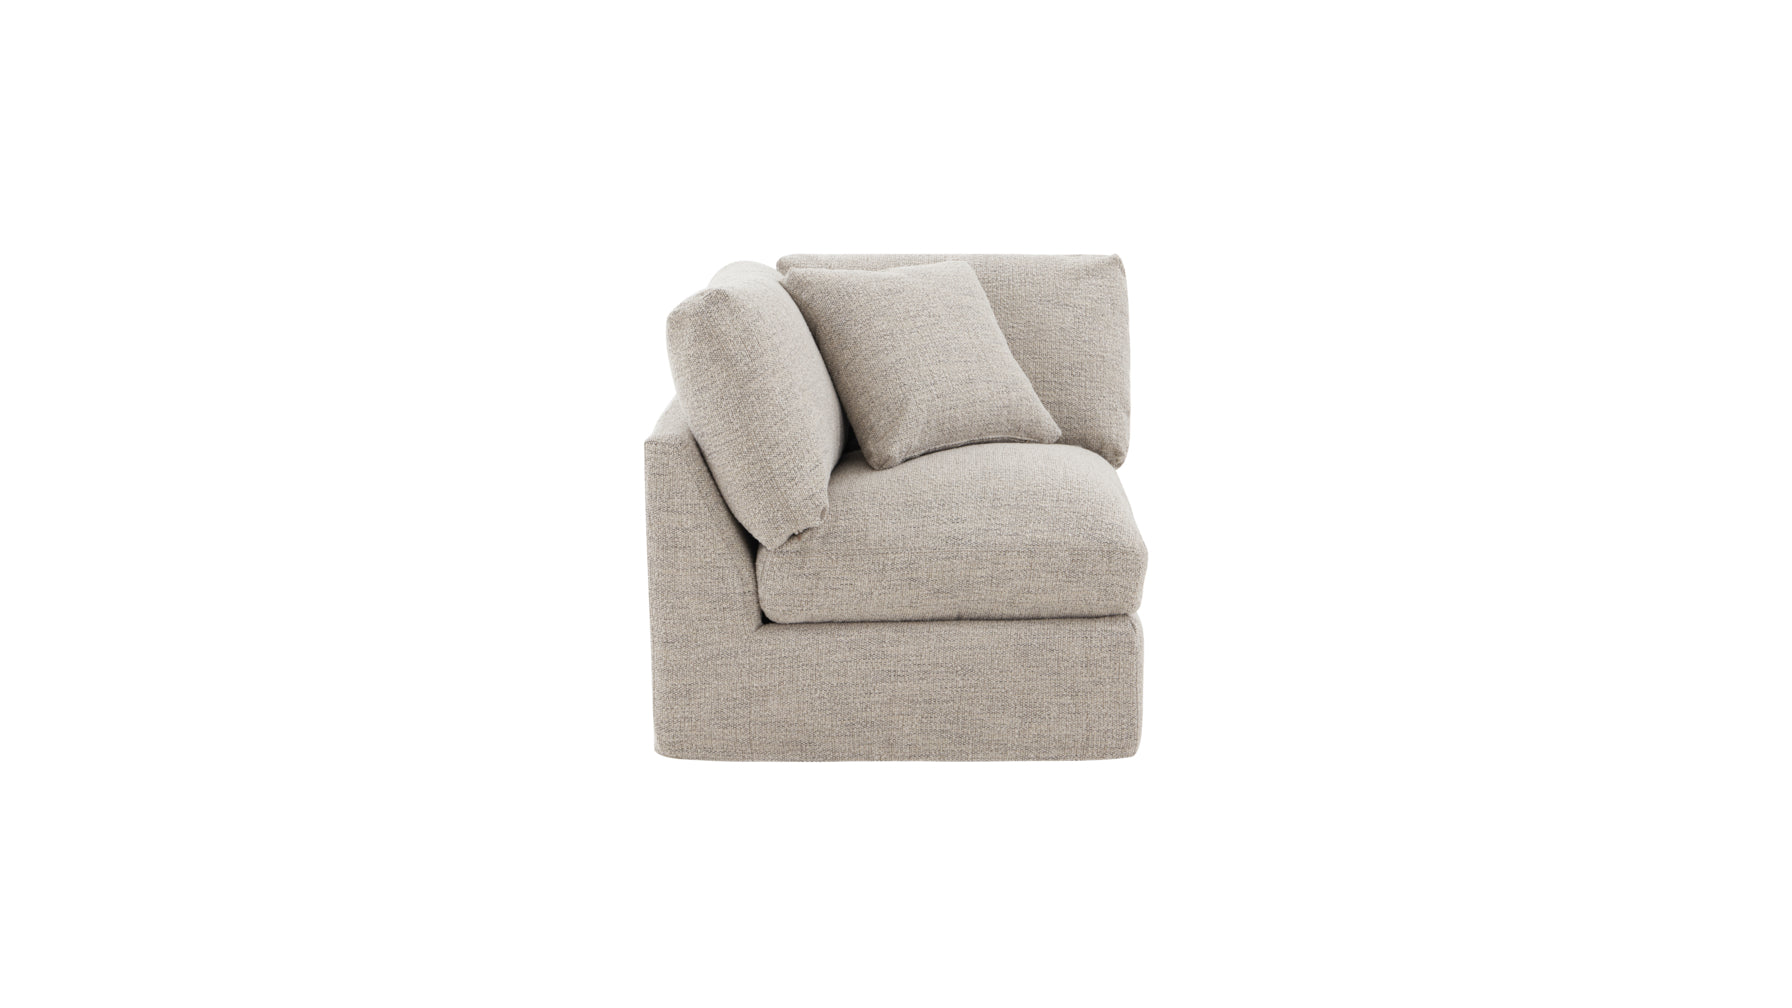 Get Together™ Corner Chair, Standard, Oatmeal - Image 5